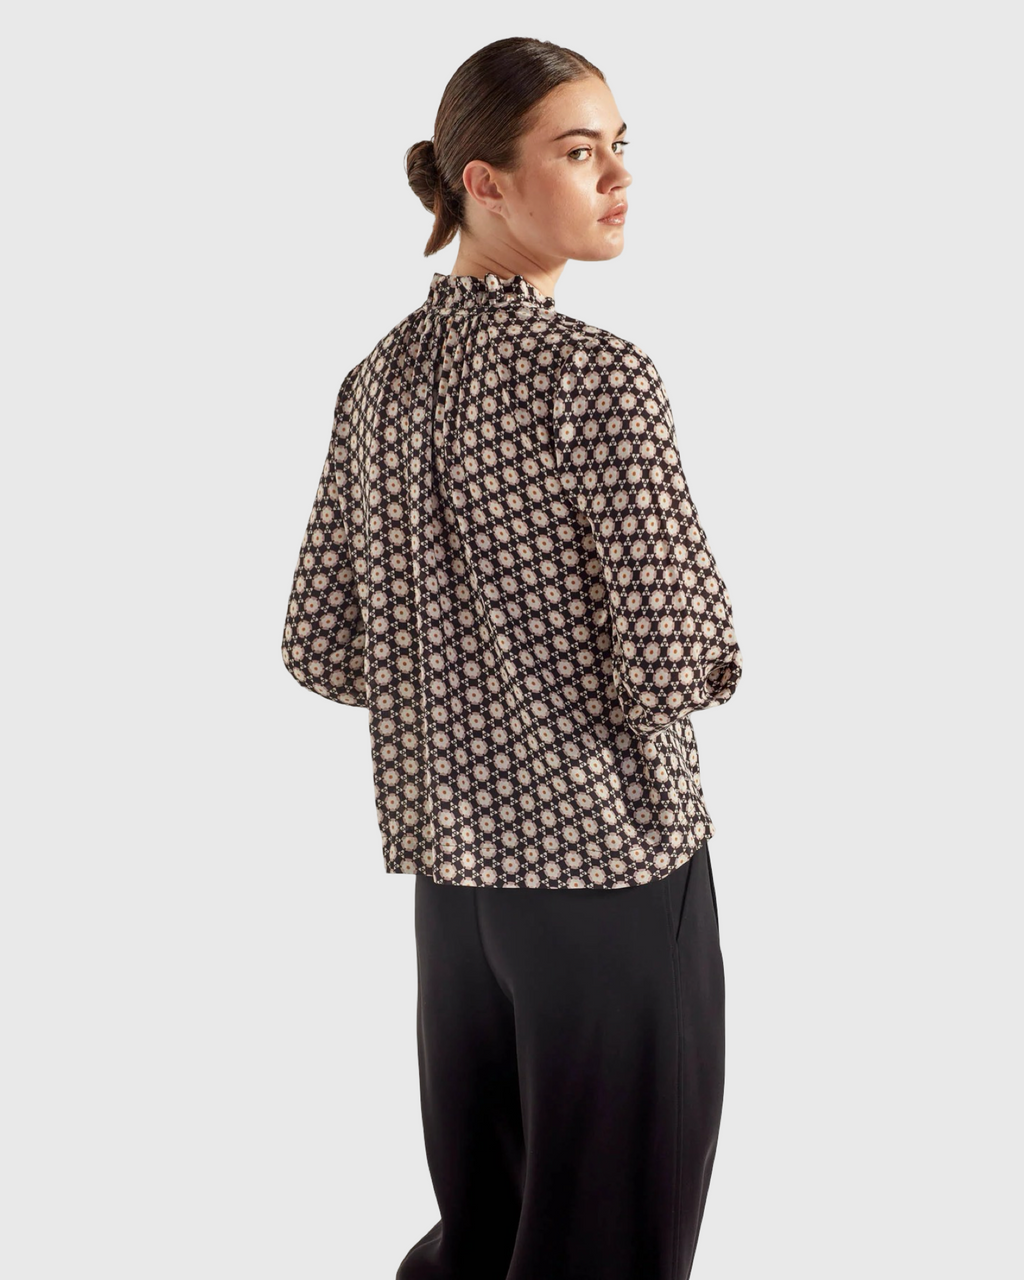 juliette hogan delilah blouse (motif crepe) carousel